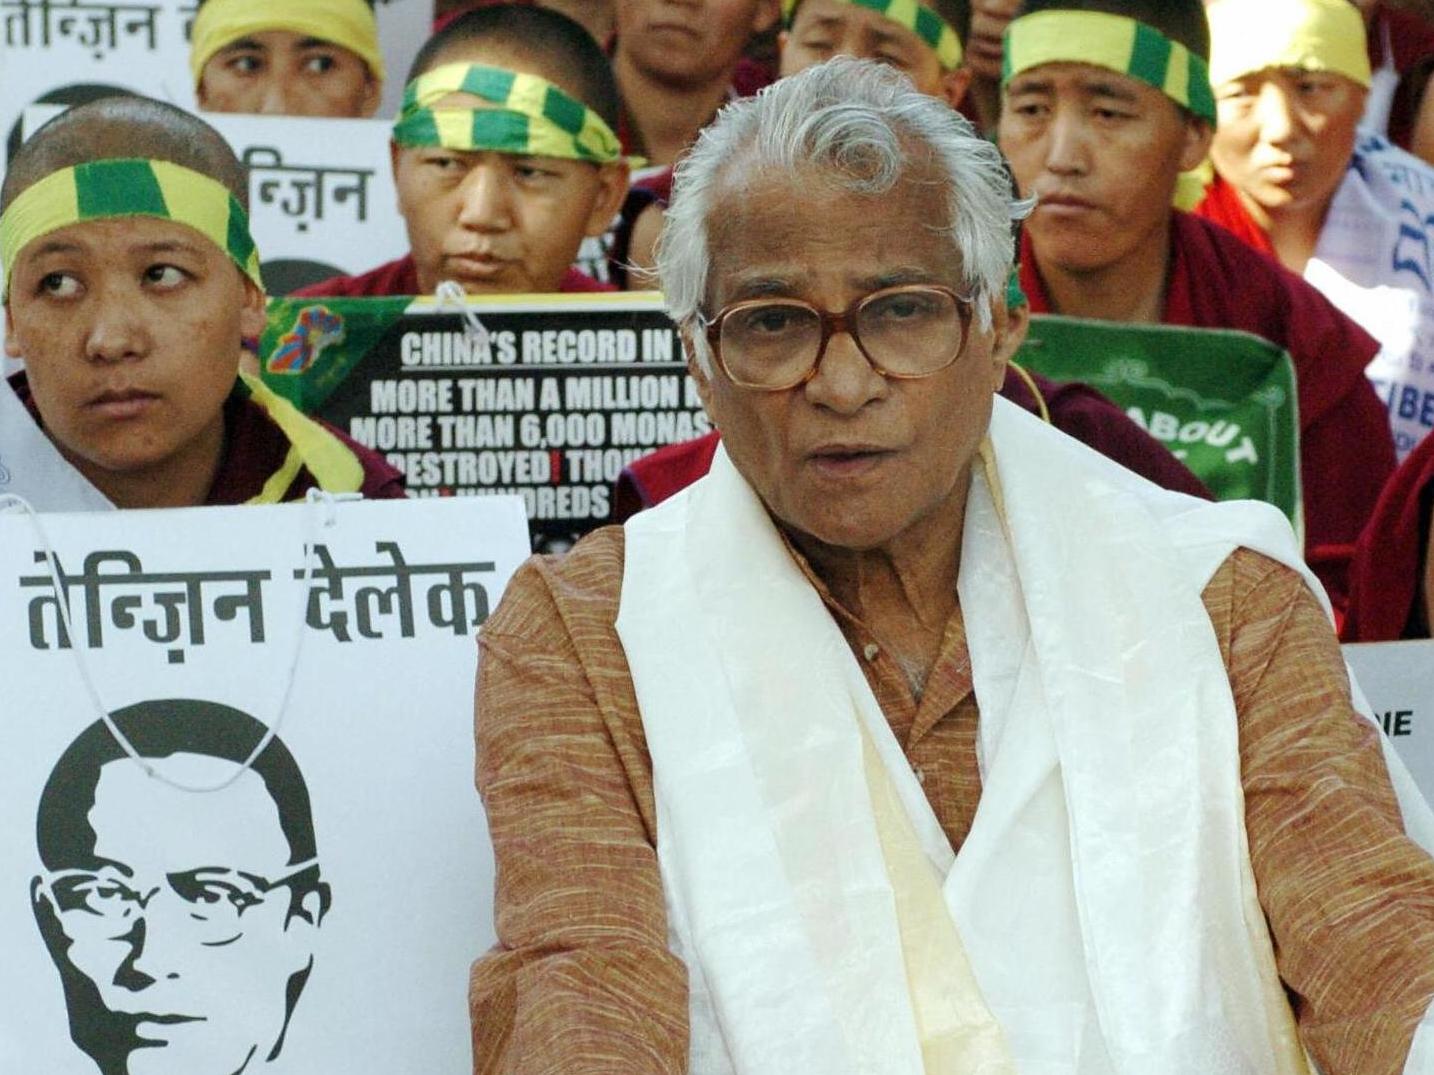 Fernandes in 2004 calling for the release of a Tibetan political prisoner